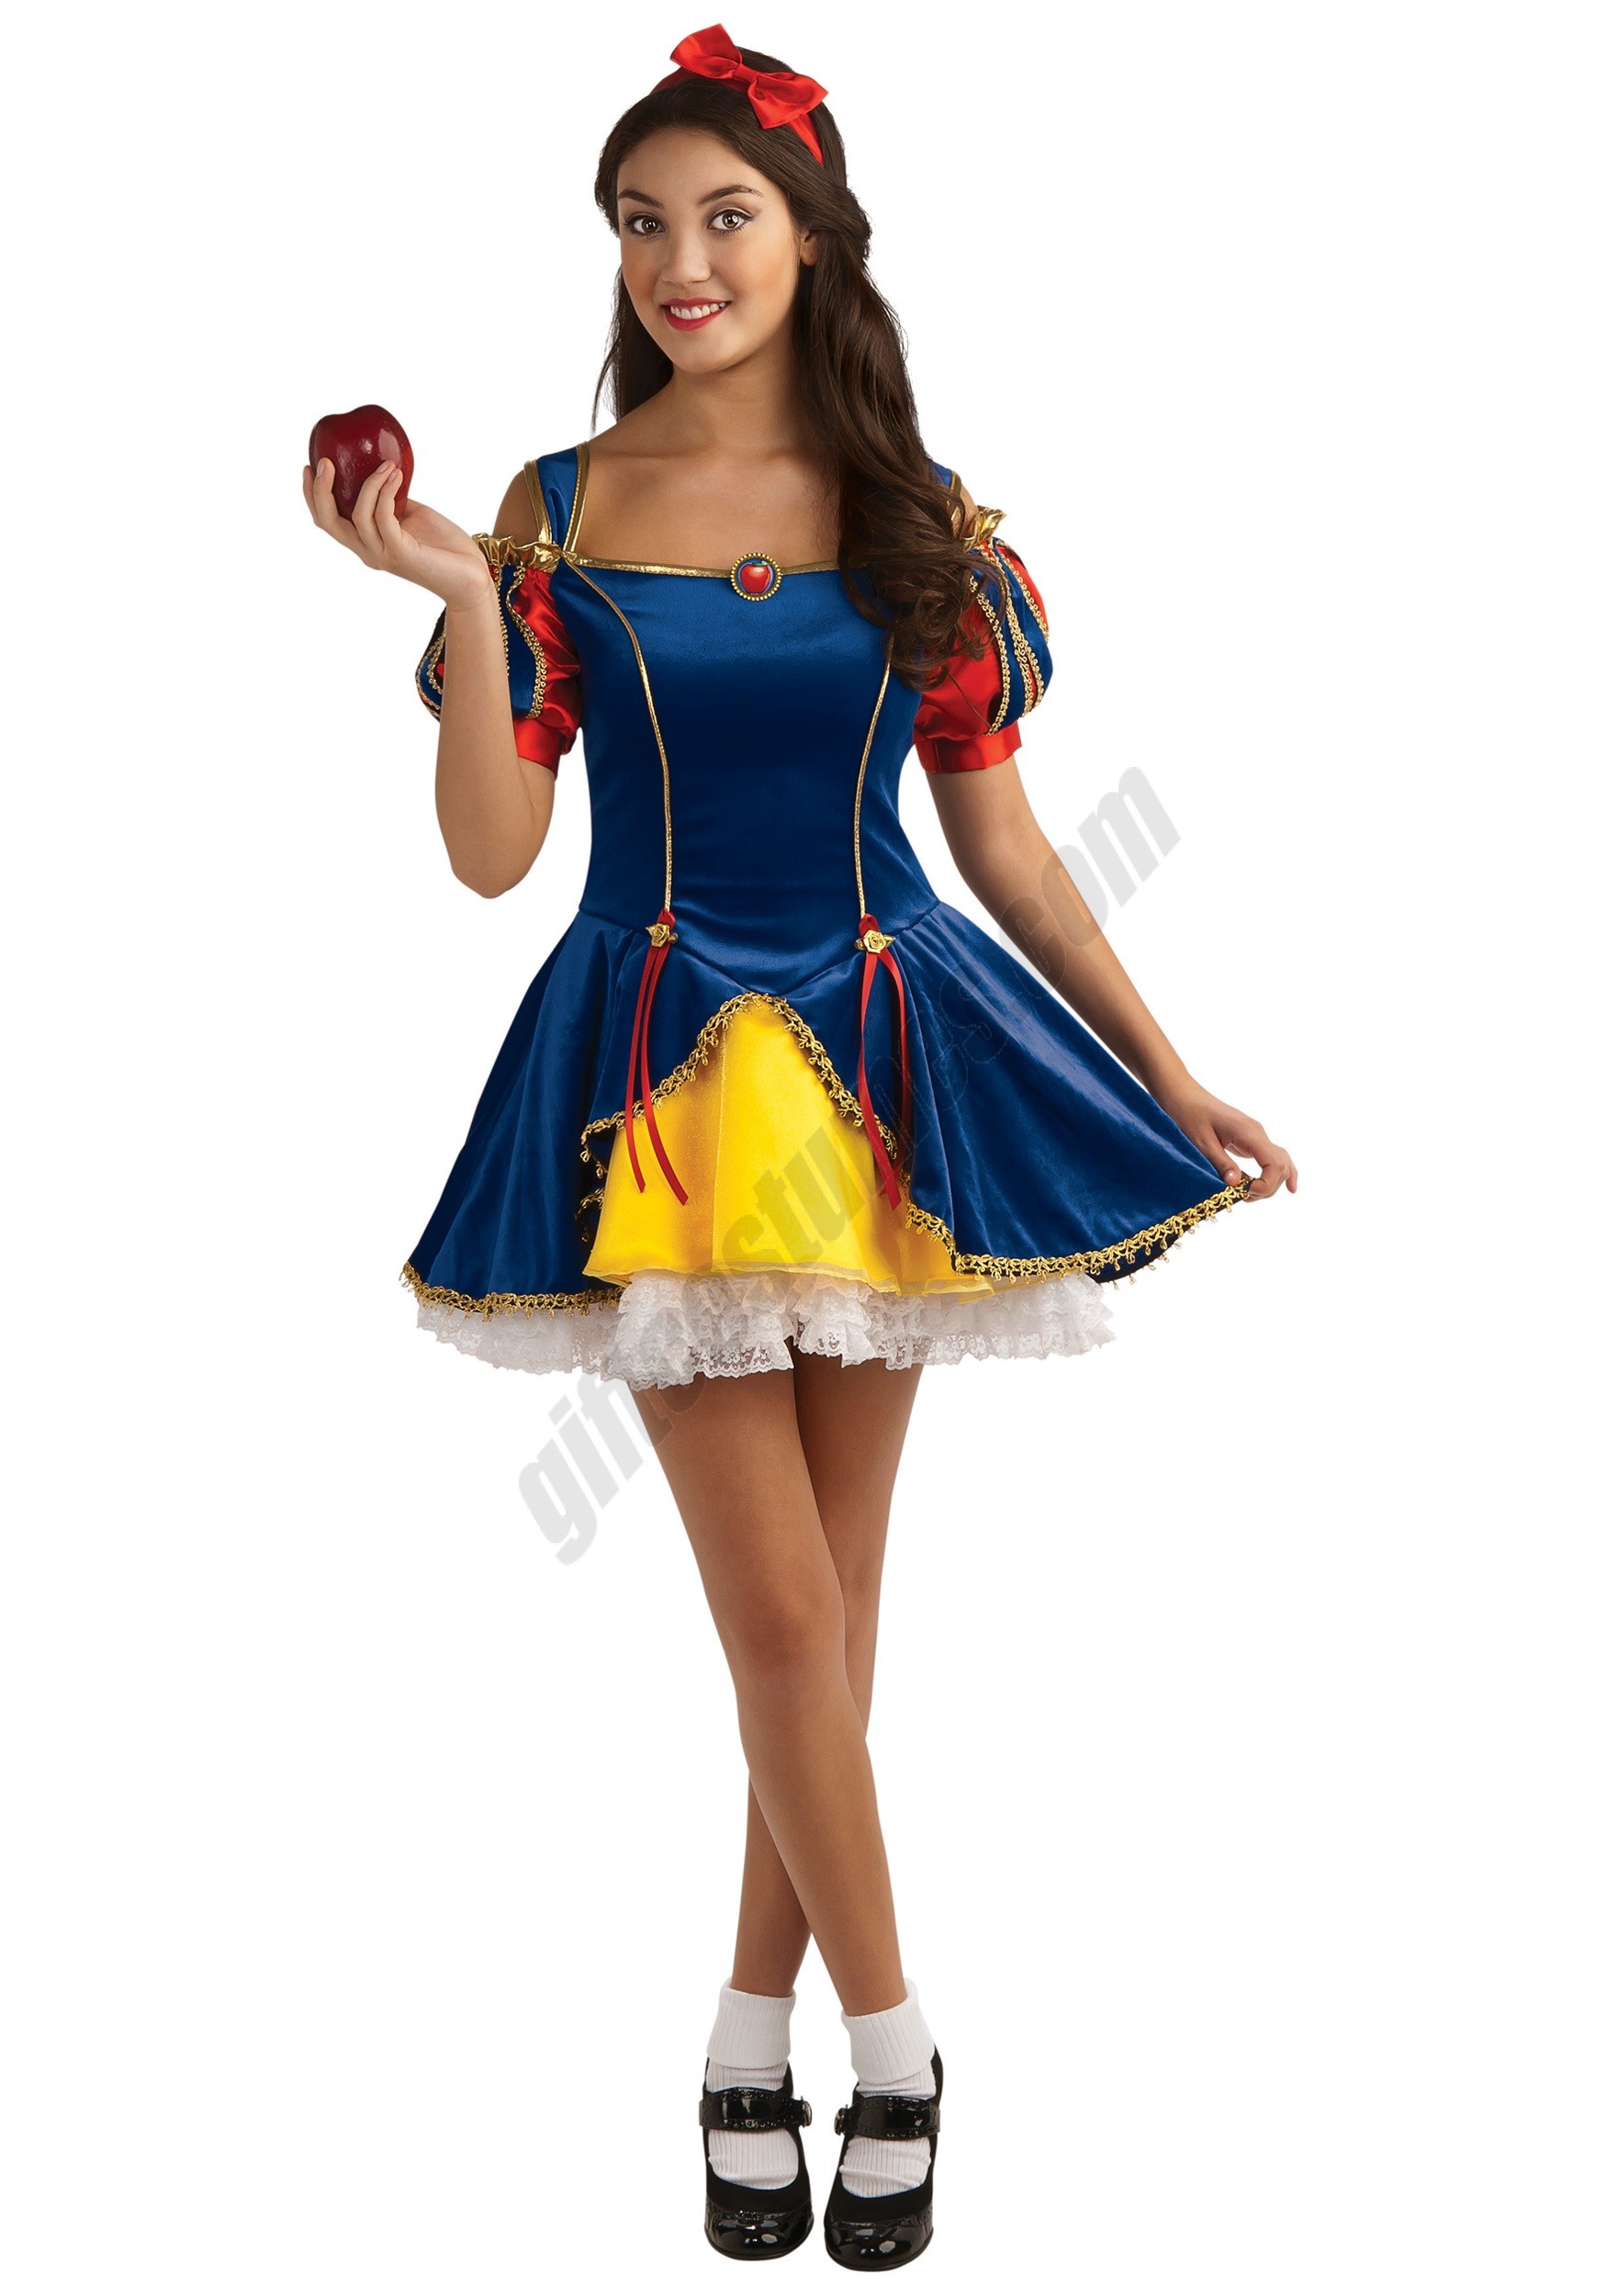 Teen Snow White Costume Promotions - Teen Snow White Costume Promotions